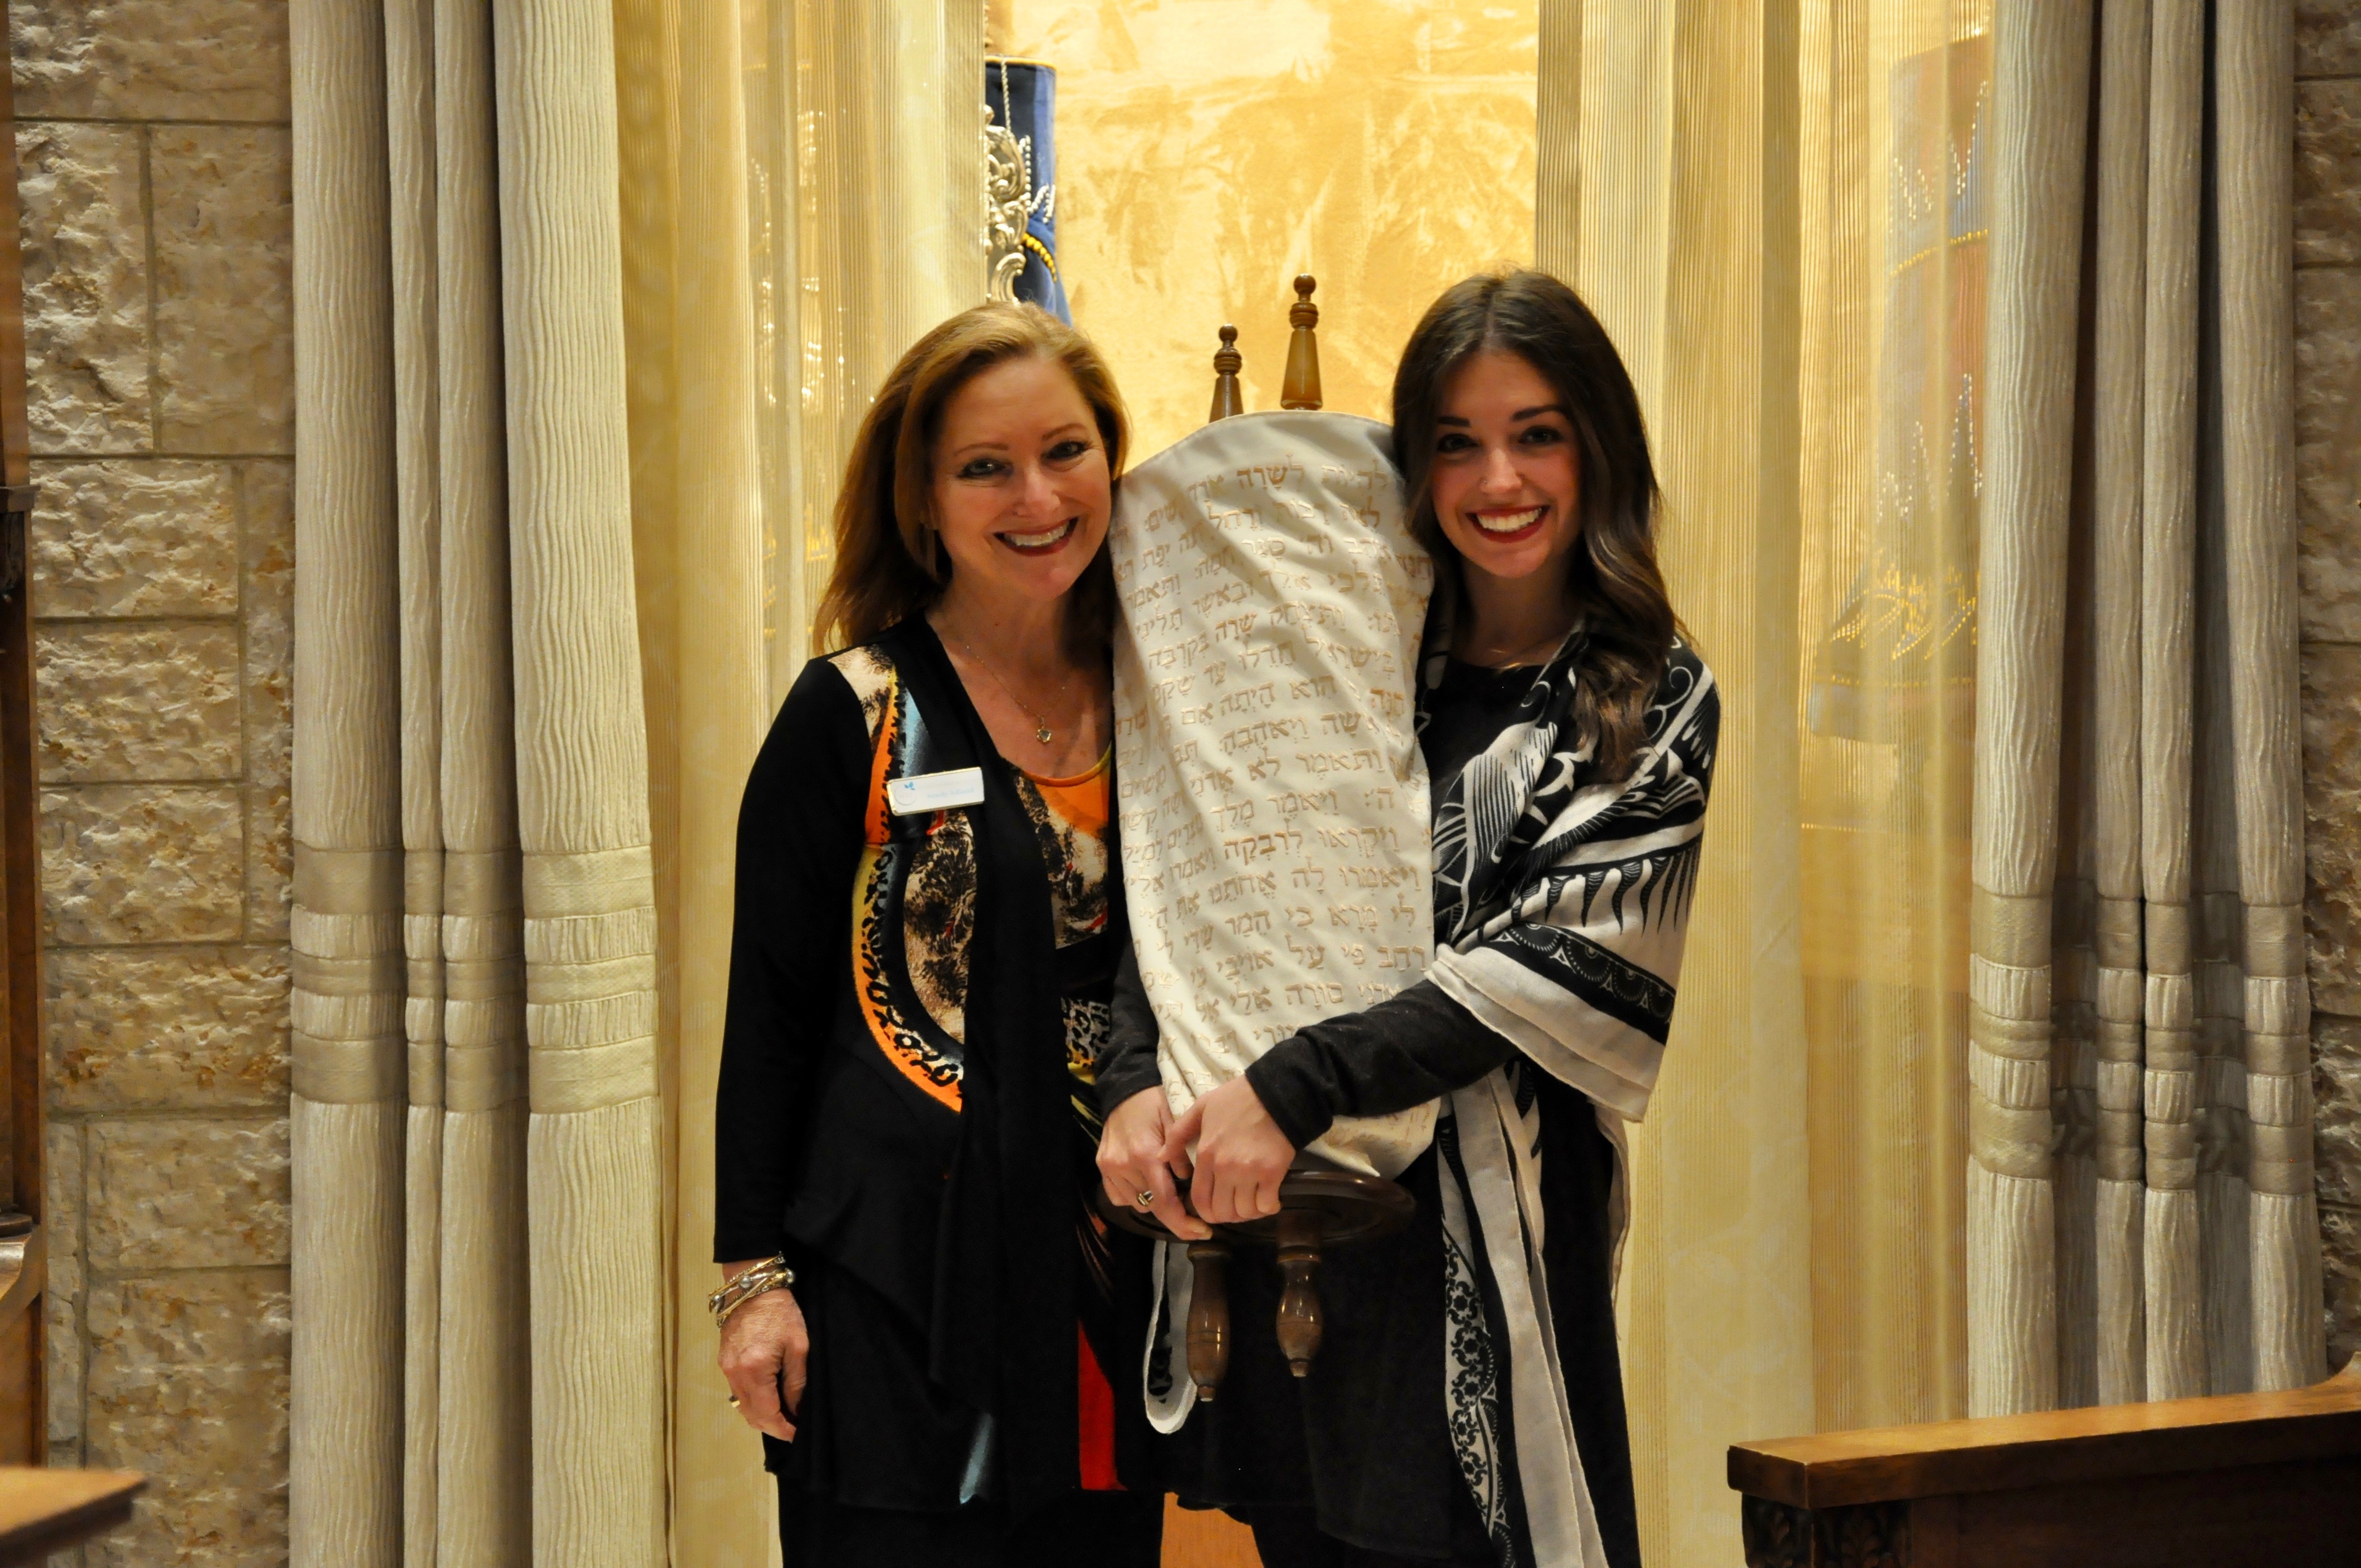 Mother Daughter holding WRJ Torah